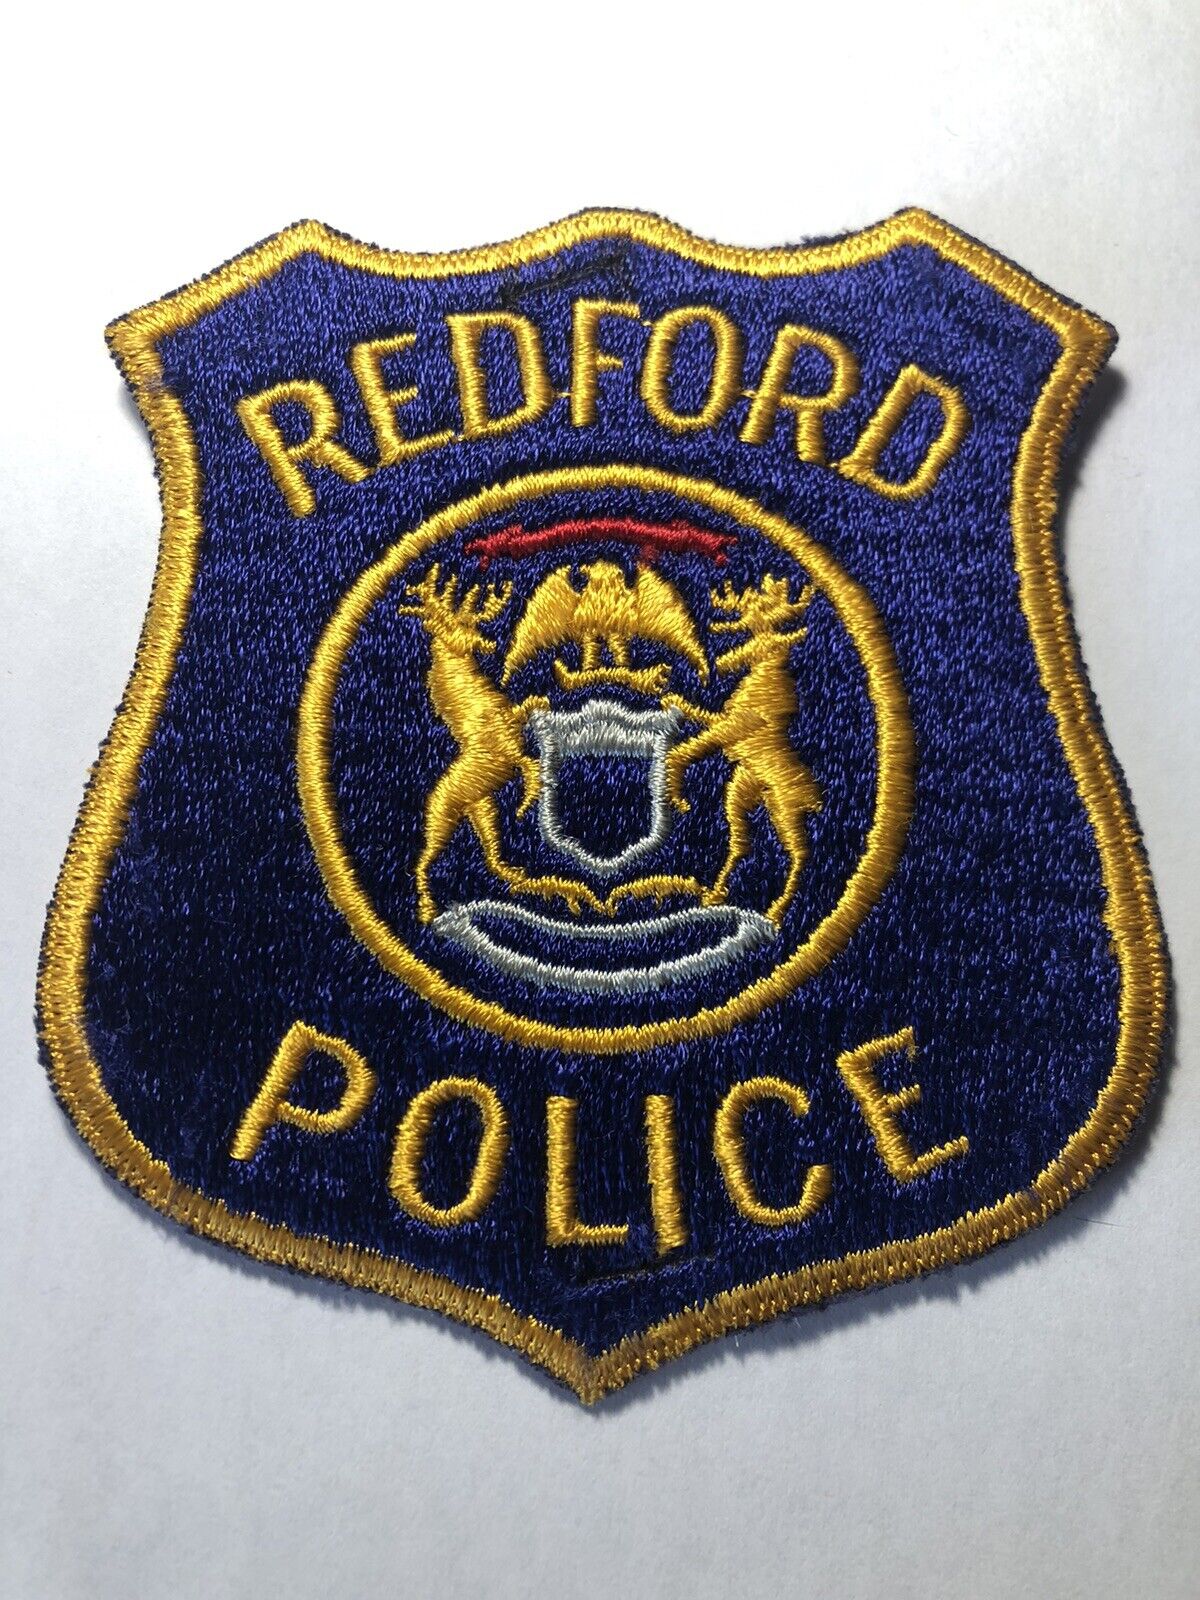 Redford Michigan Police Patch ~ Vintage ~ RARE